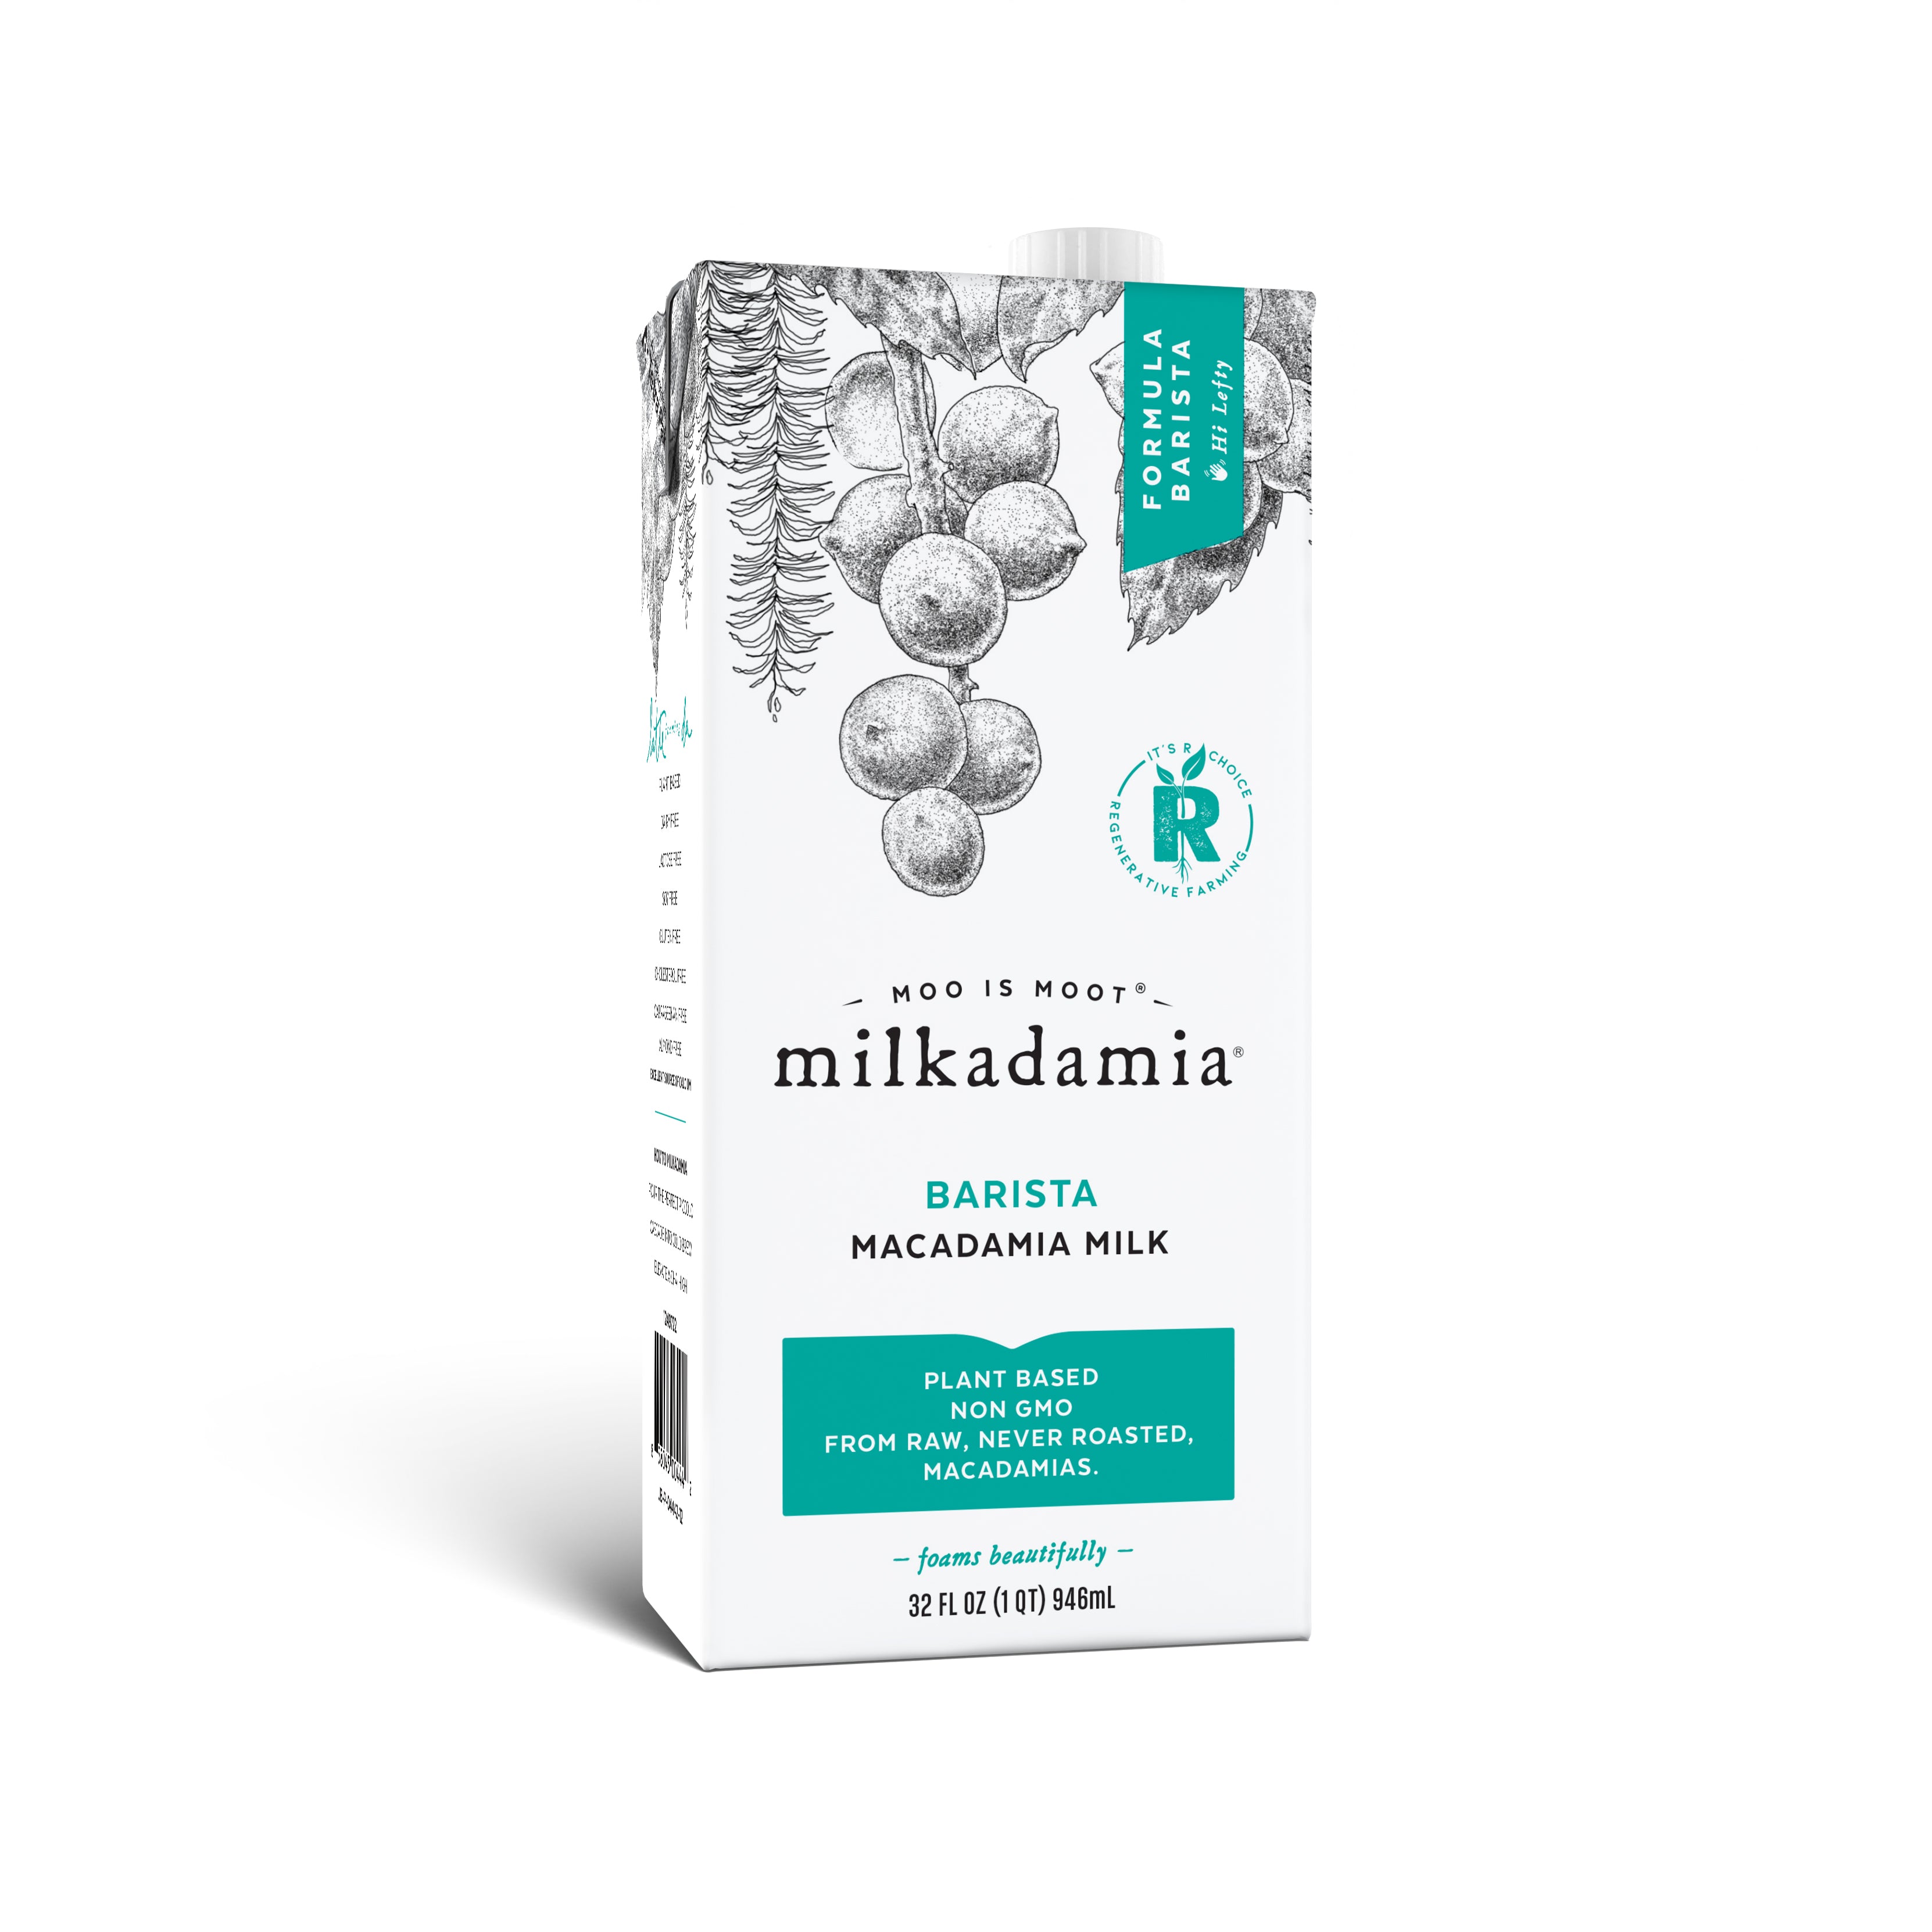 Milkadamia - Case of 6 32oz Cartons: Latte da Macadamia Milk